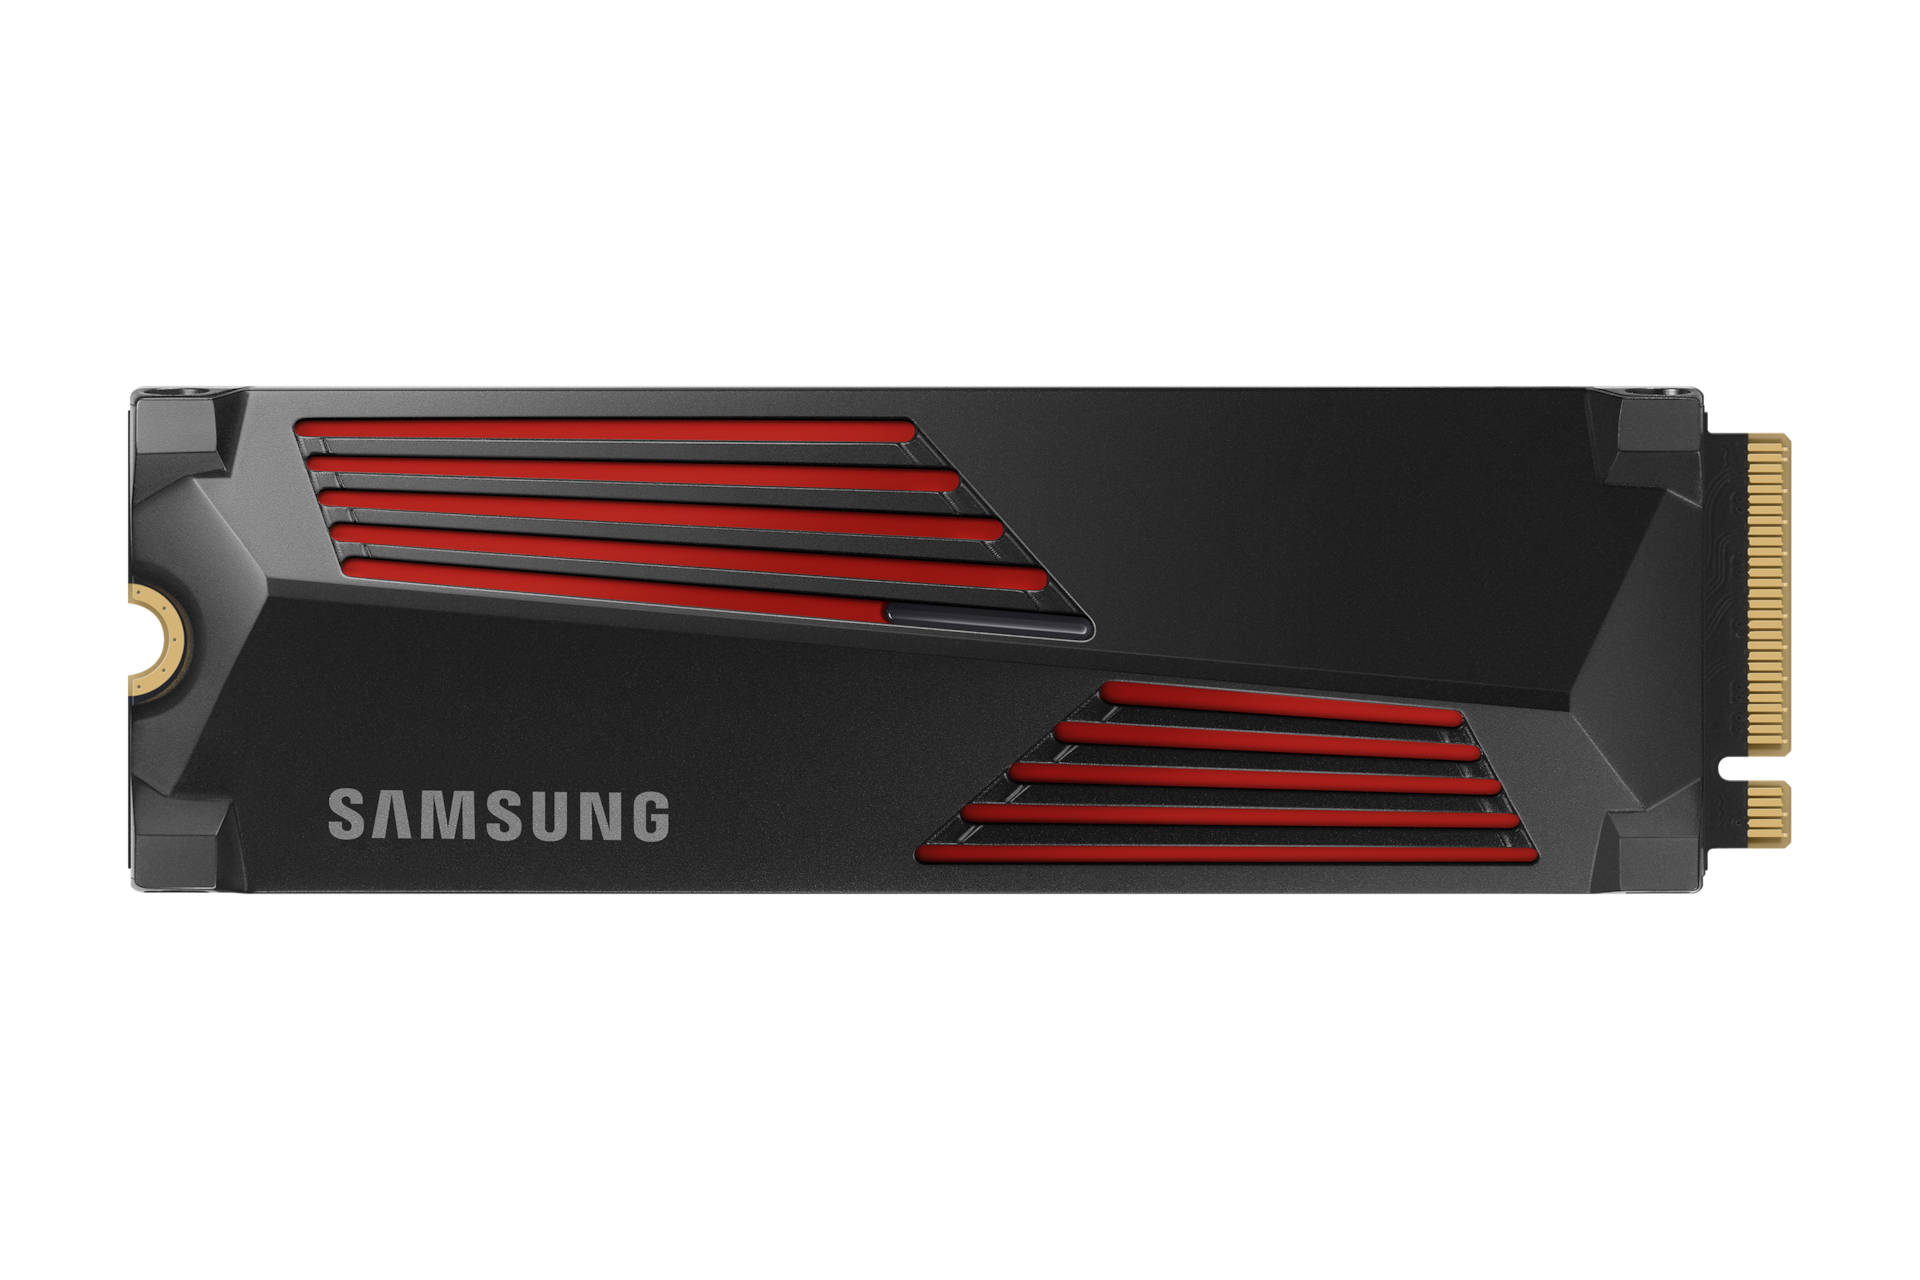 Samsung Announces 4 TB SSD 990 PRO Series